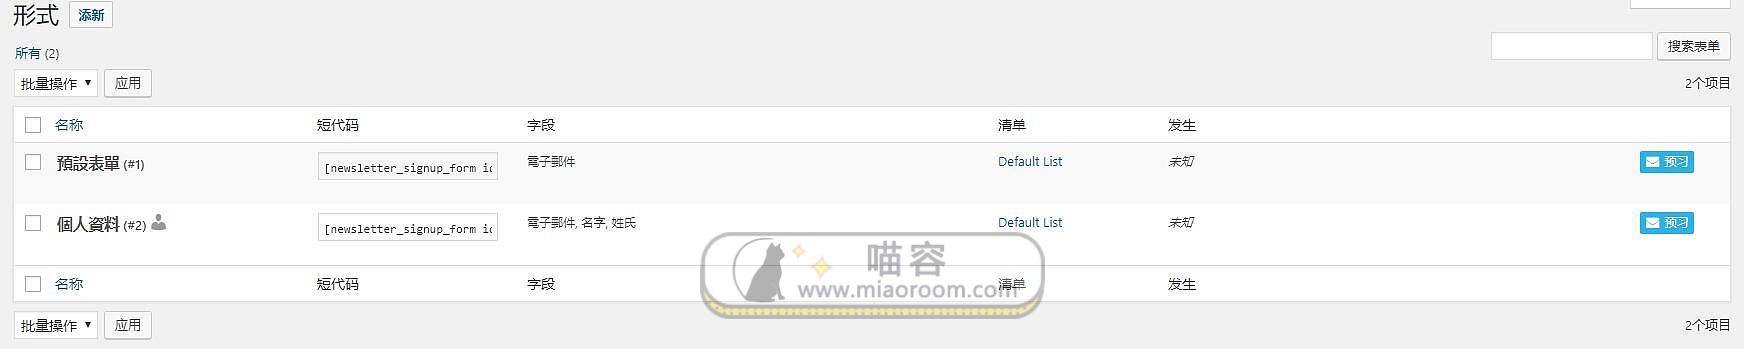 「WP插件」 邮件通讯 Mailster Pro v2.4.4 已更新 高级专业版 【中文汉化】